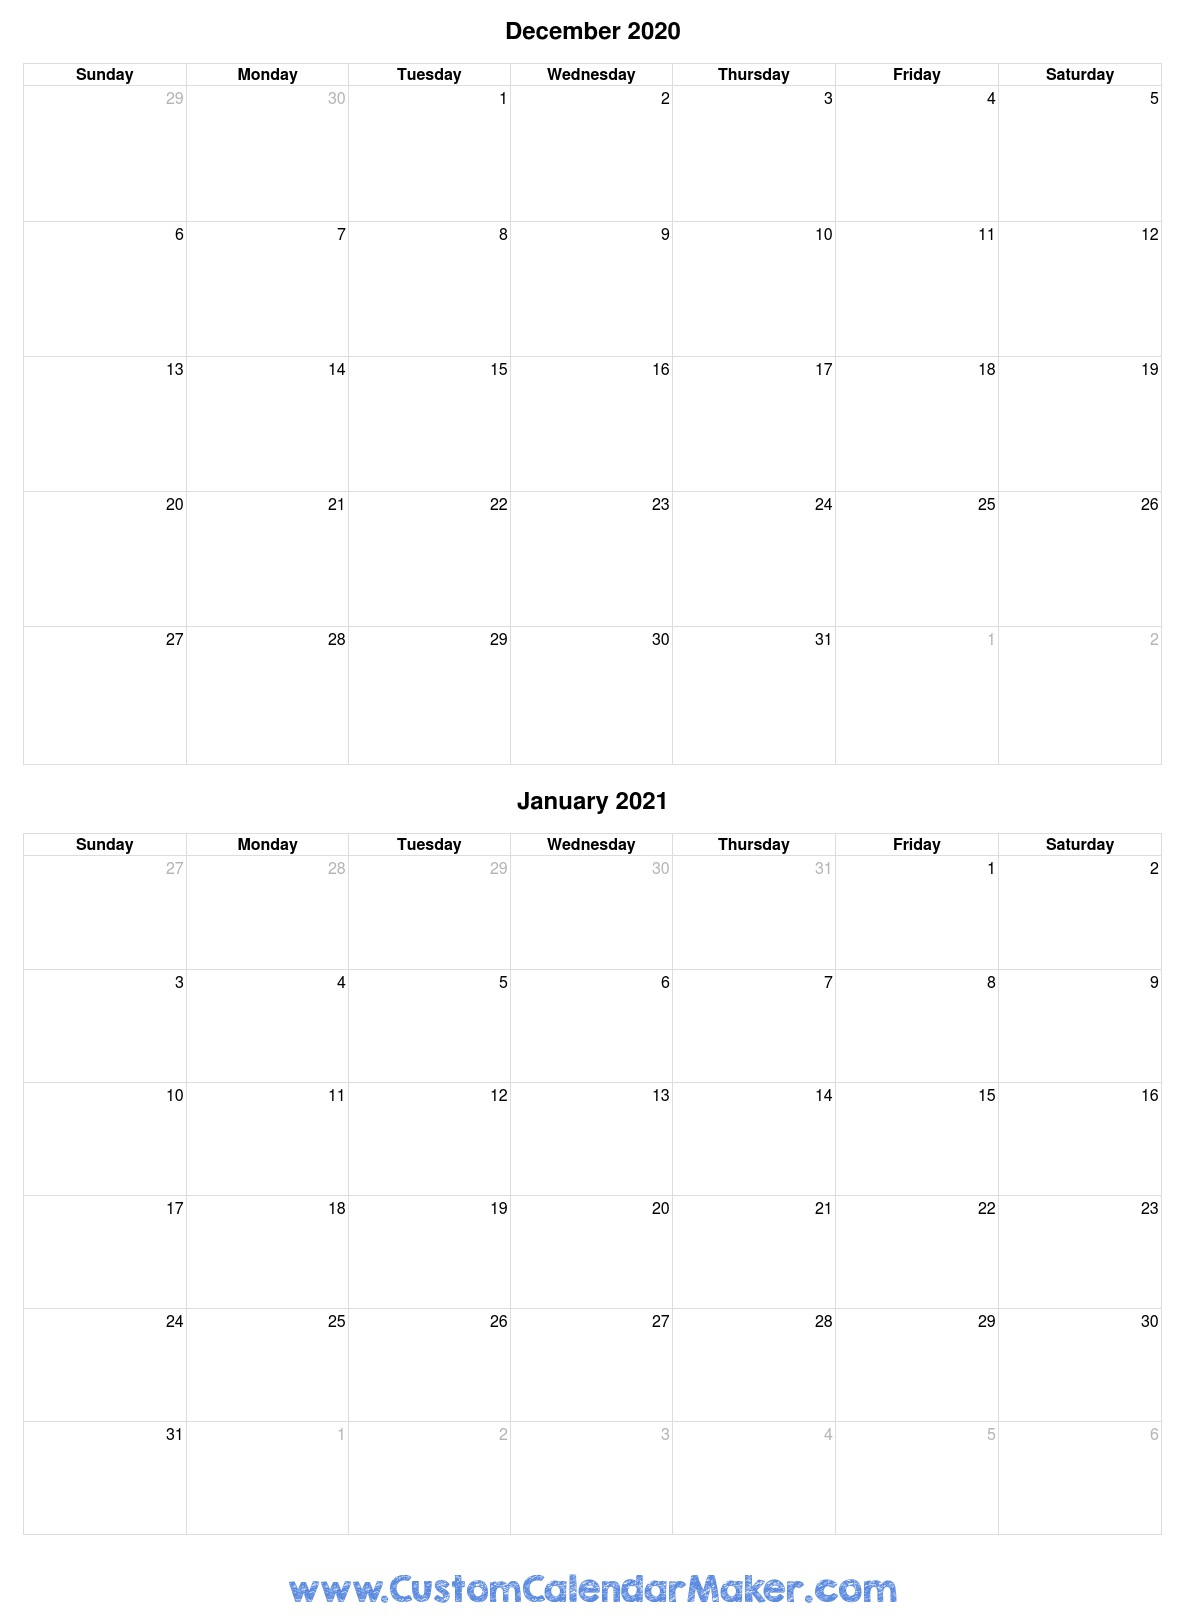 Calendar December 2020 January 2021 | Printable Calendars 2021 Calendar Of December 2020 And January 2021